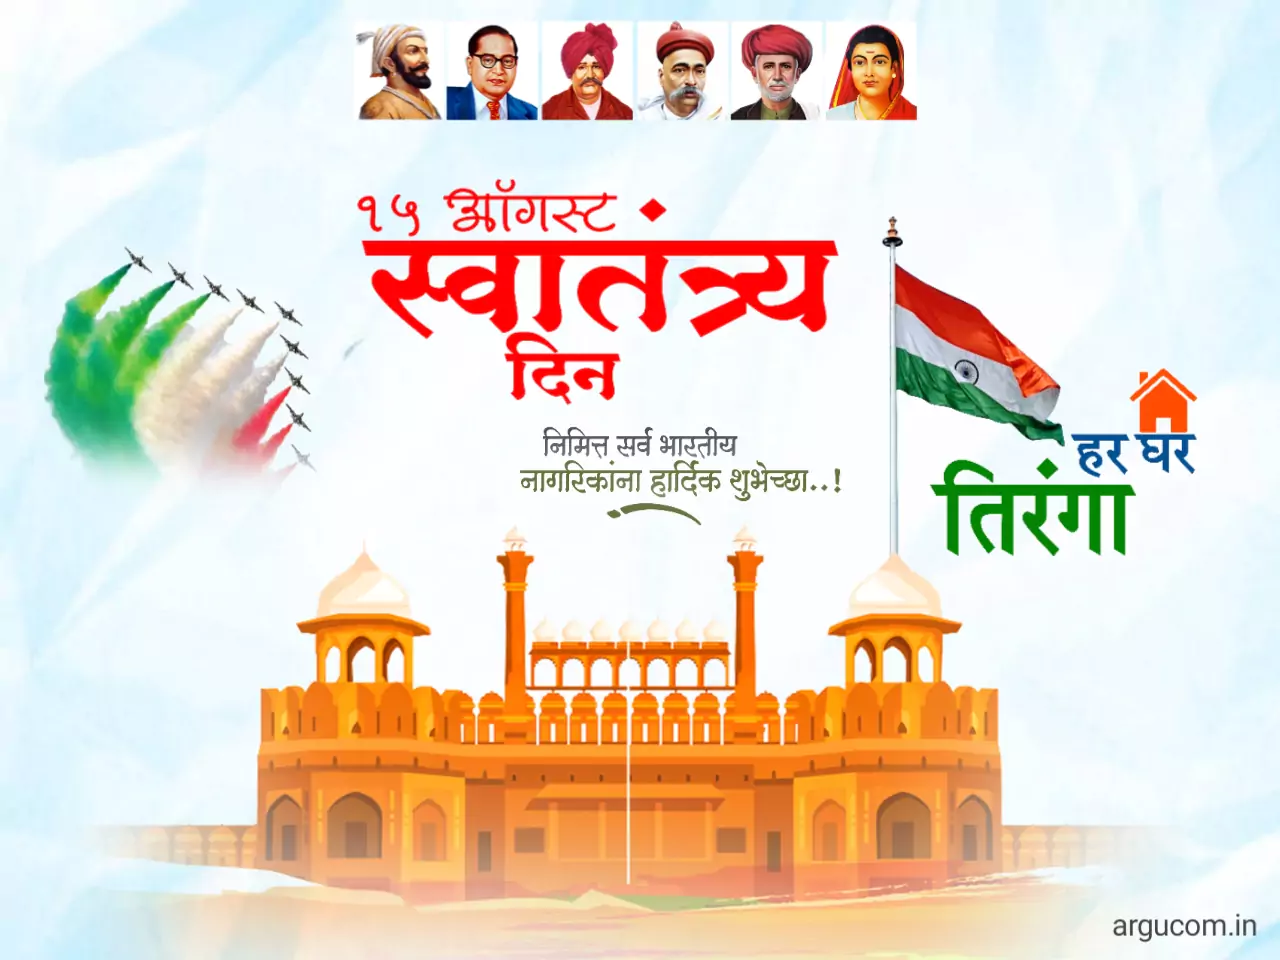 Independence Day Quotes In Marathi, स्वातंत्र दिवस कोट्स मराठी